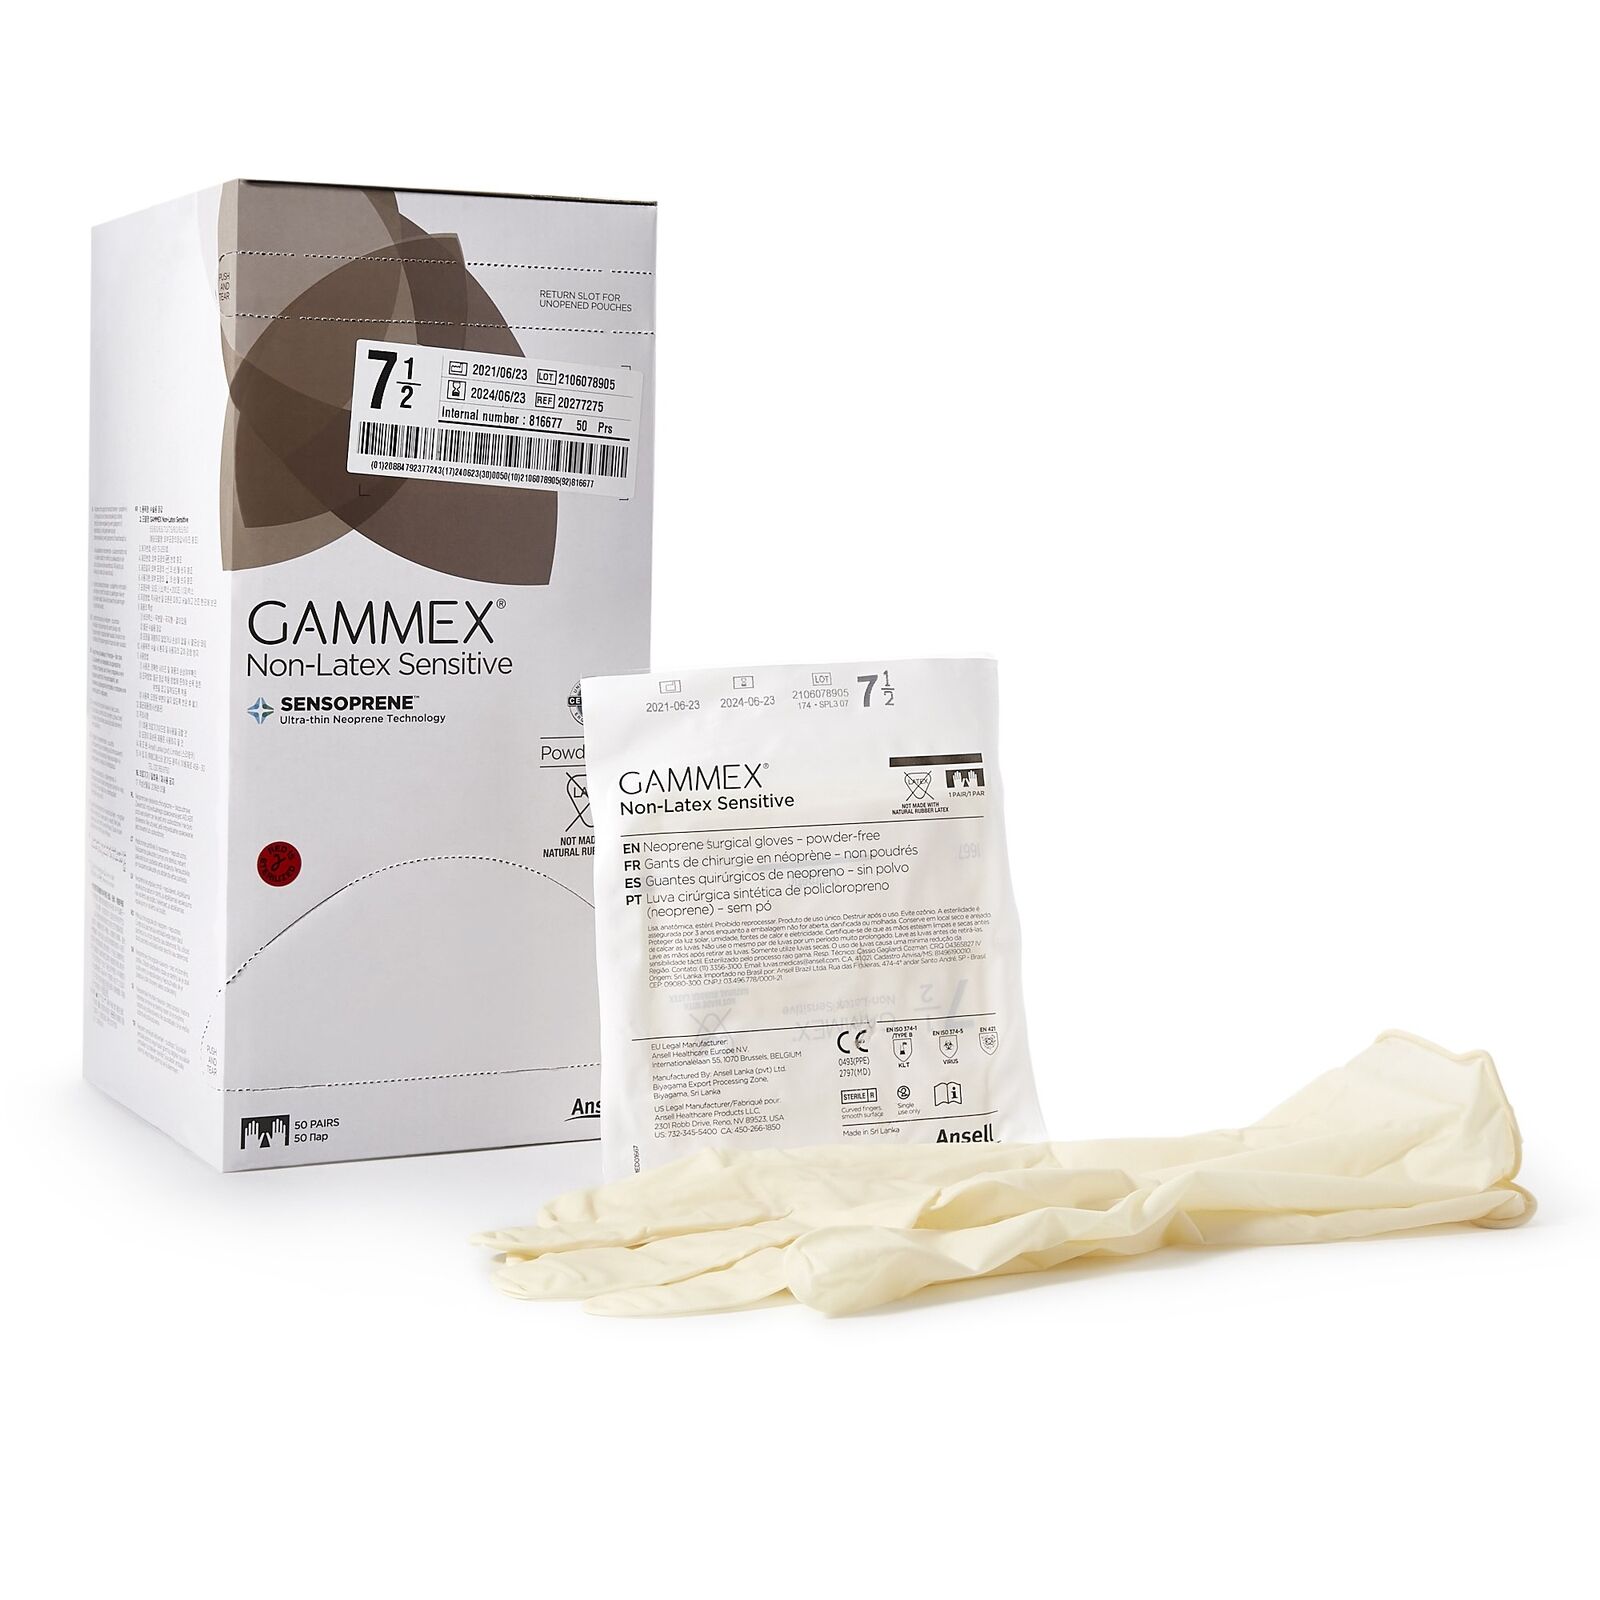 GAMMEX Non-Latex Sensitive Polychloroprene Surgical Glove -  200 per Case